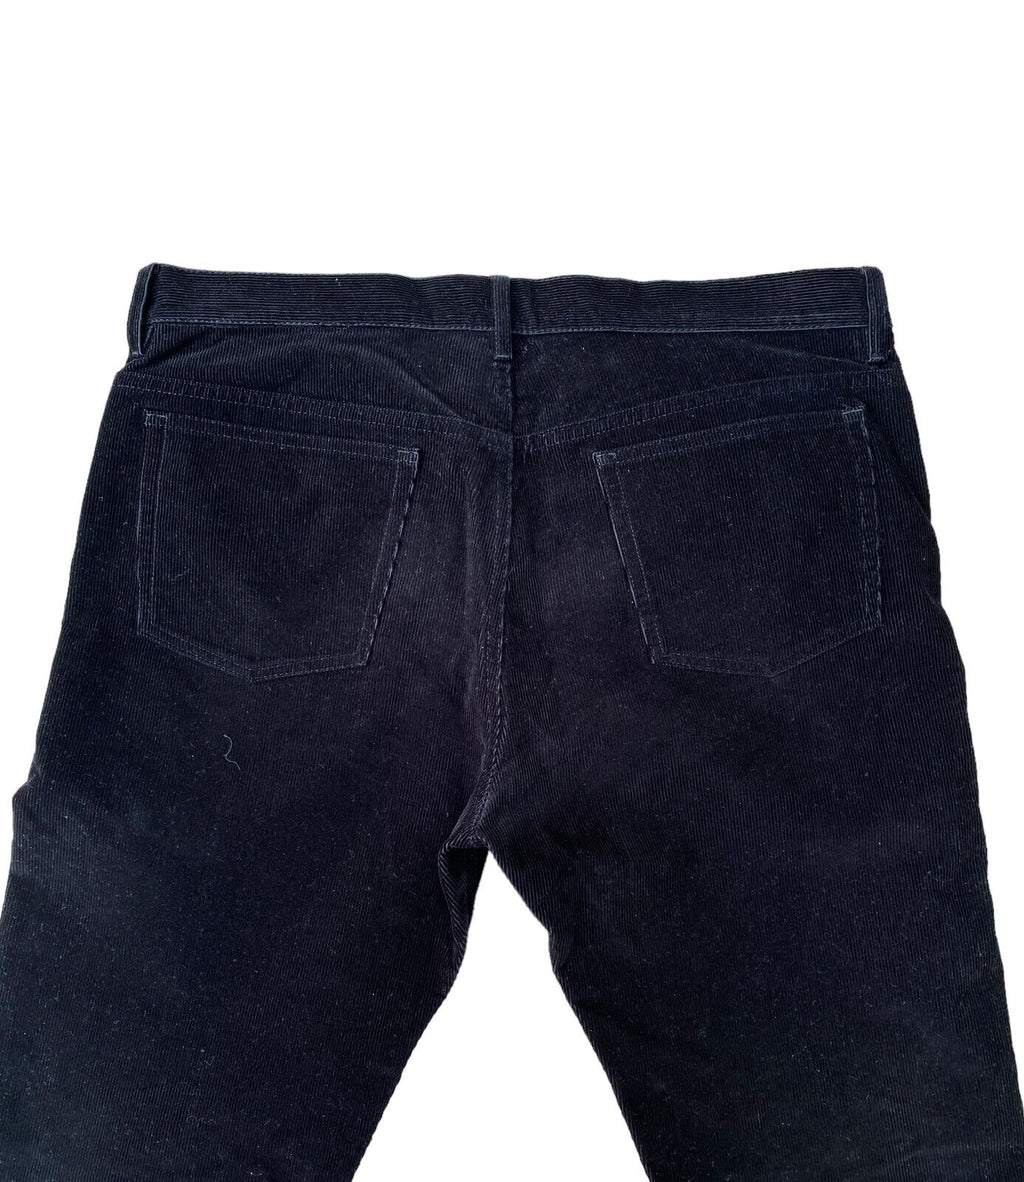 Black Corduroy Pants  Petit Standard  Slim Fit  Size 32 APC